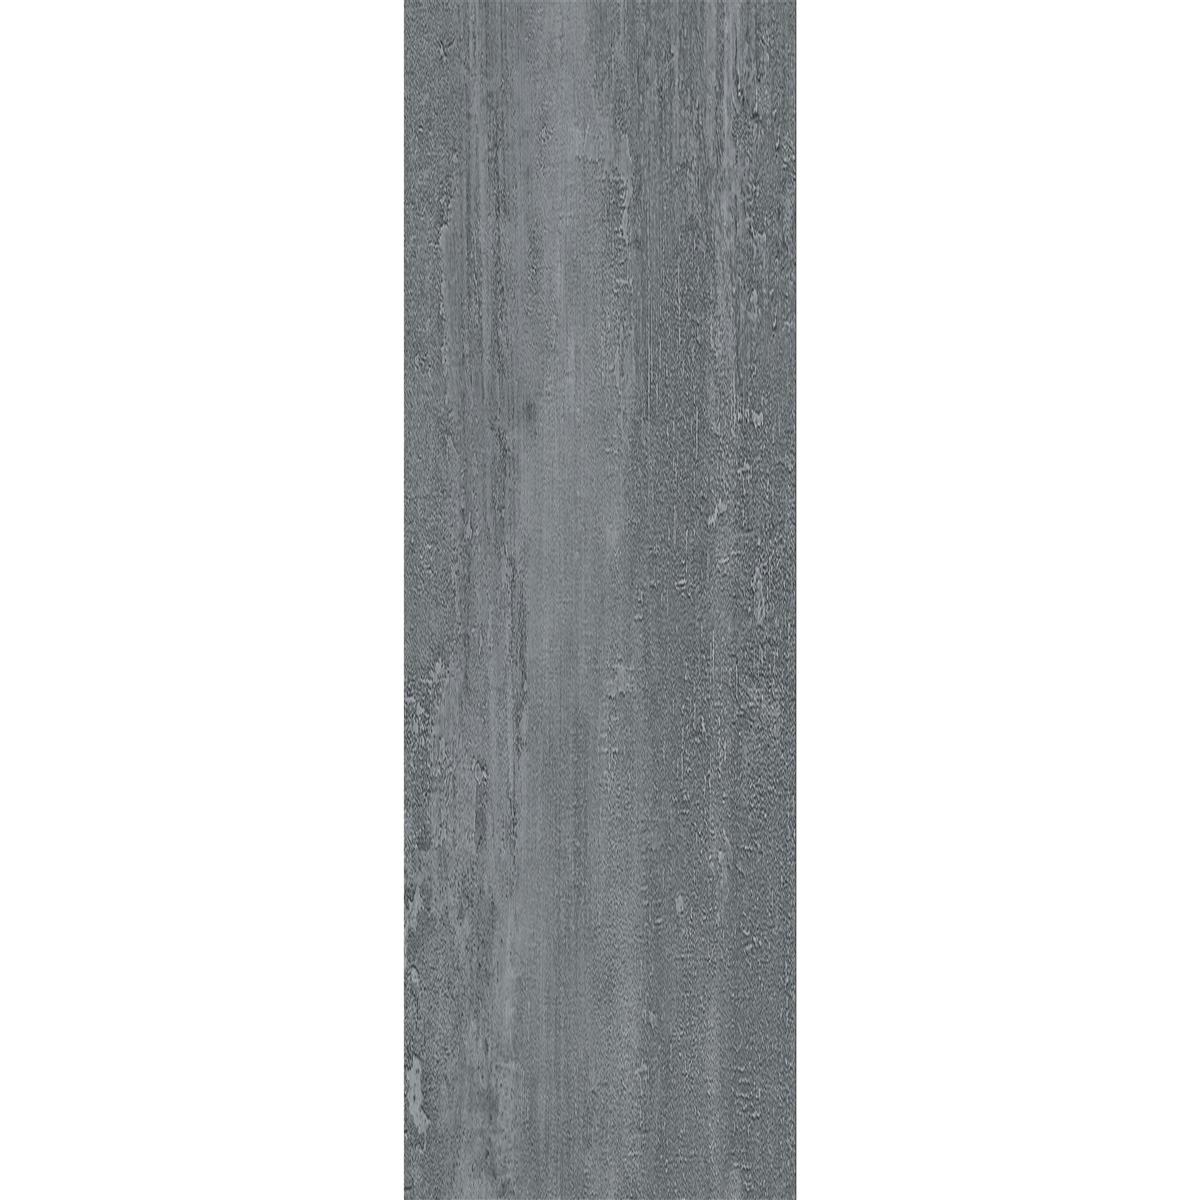 Vinylboden Klicksystem Gandia Hellgrau 17,2x121cm